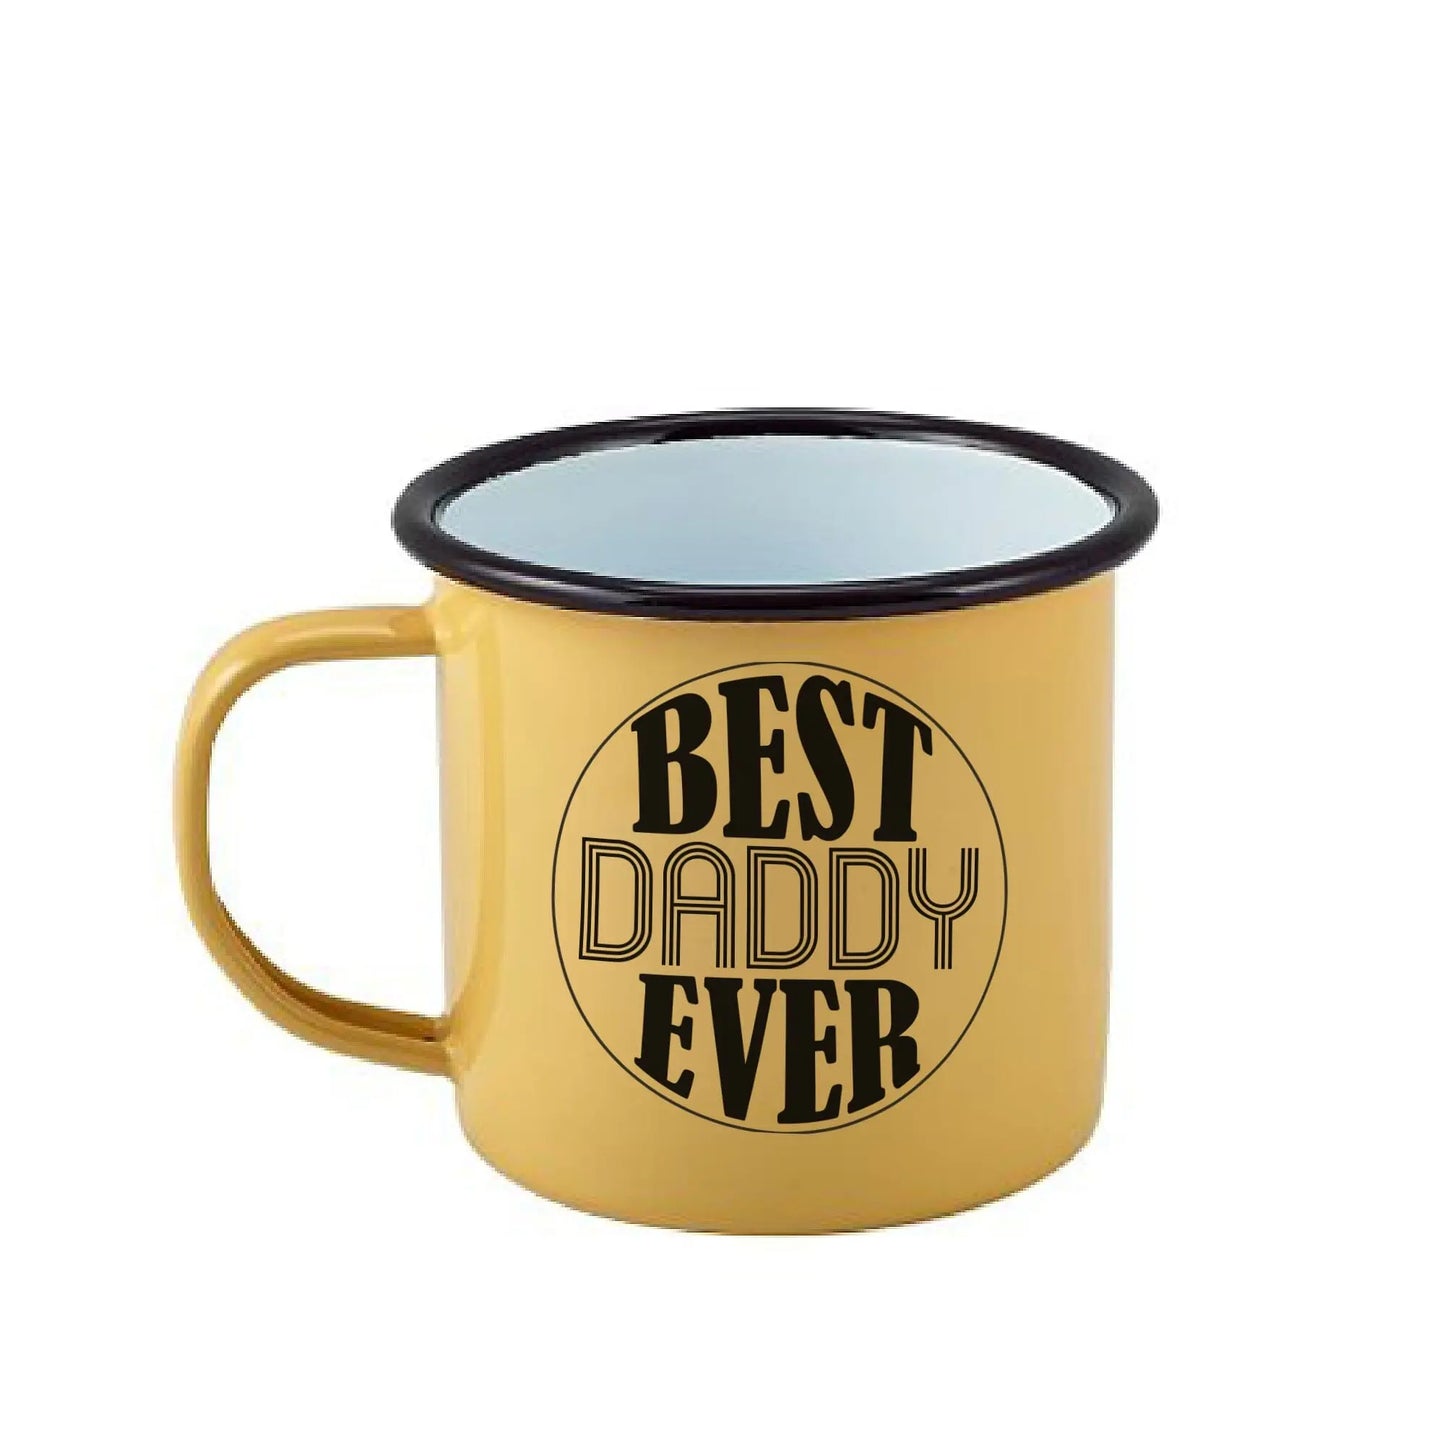 Personalised Best Daddy Ever Enamel Mug - Duncan Stewart 1978 Enamel-Mug-Yellow-with-Black-Rim Duncan Stewart 1978